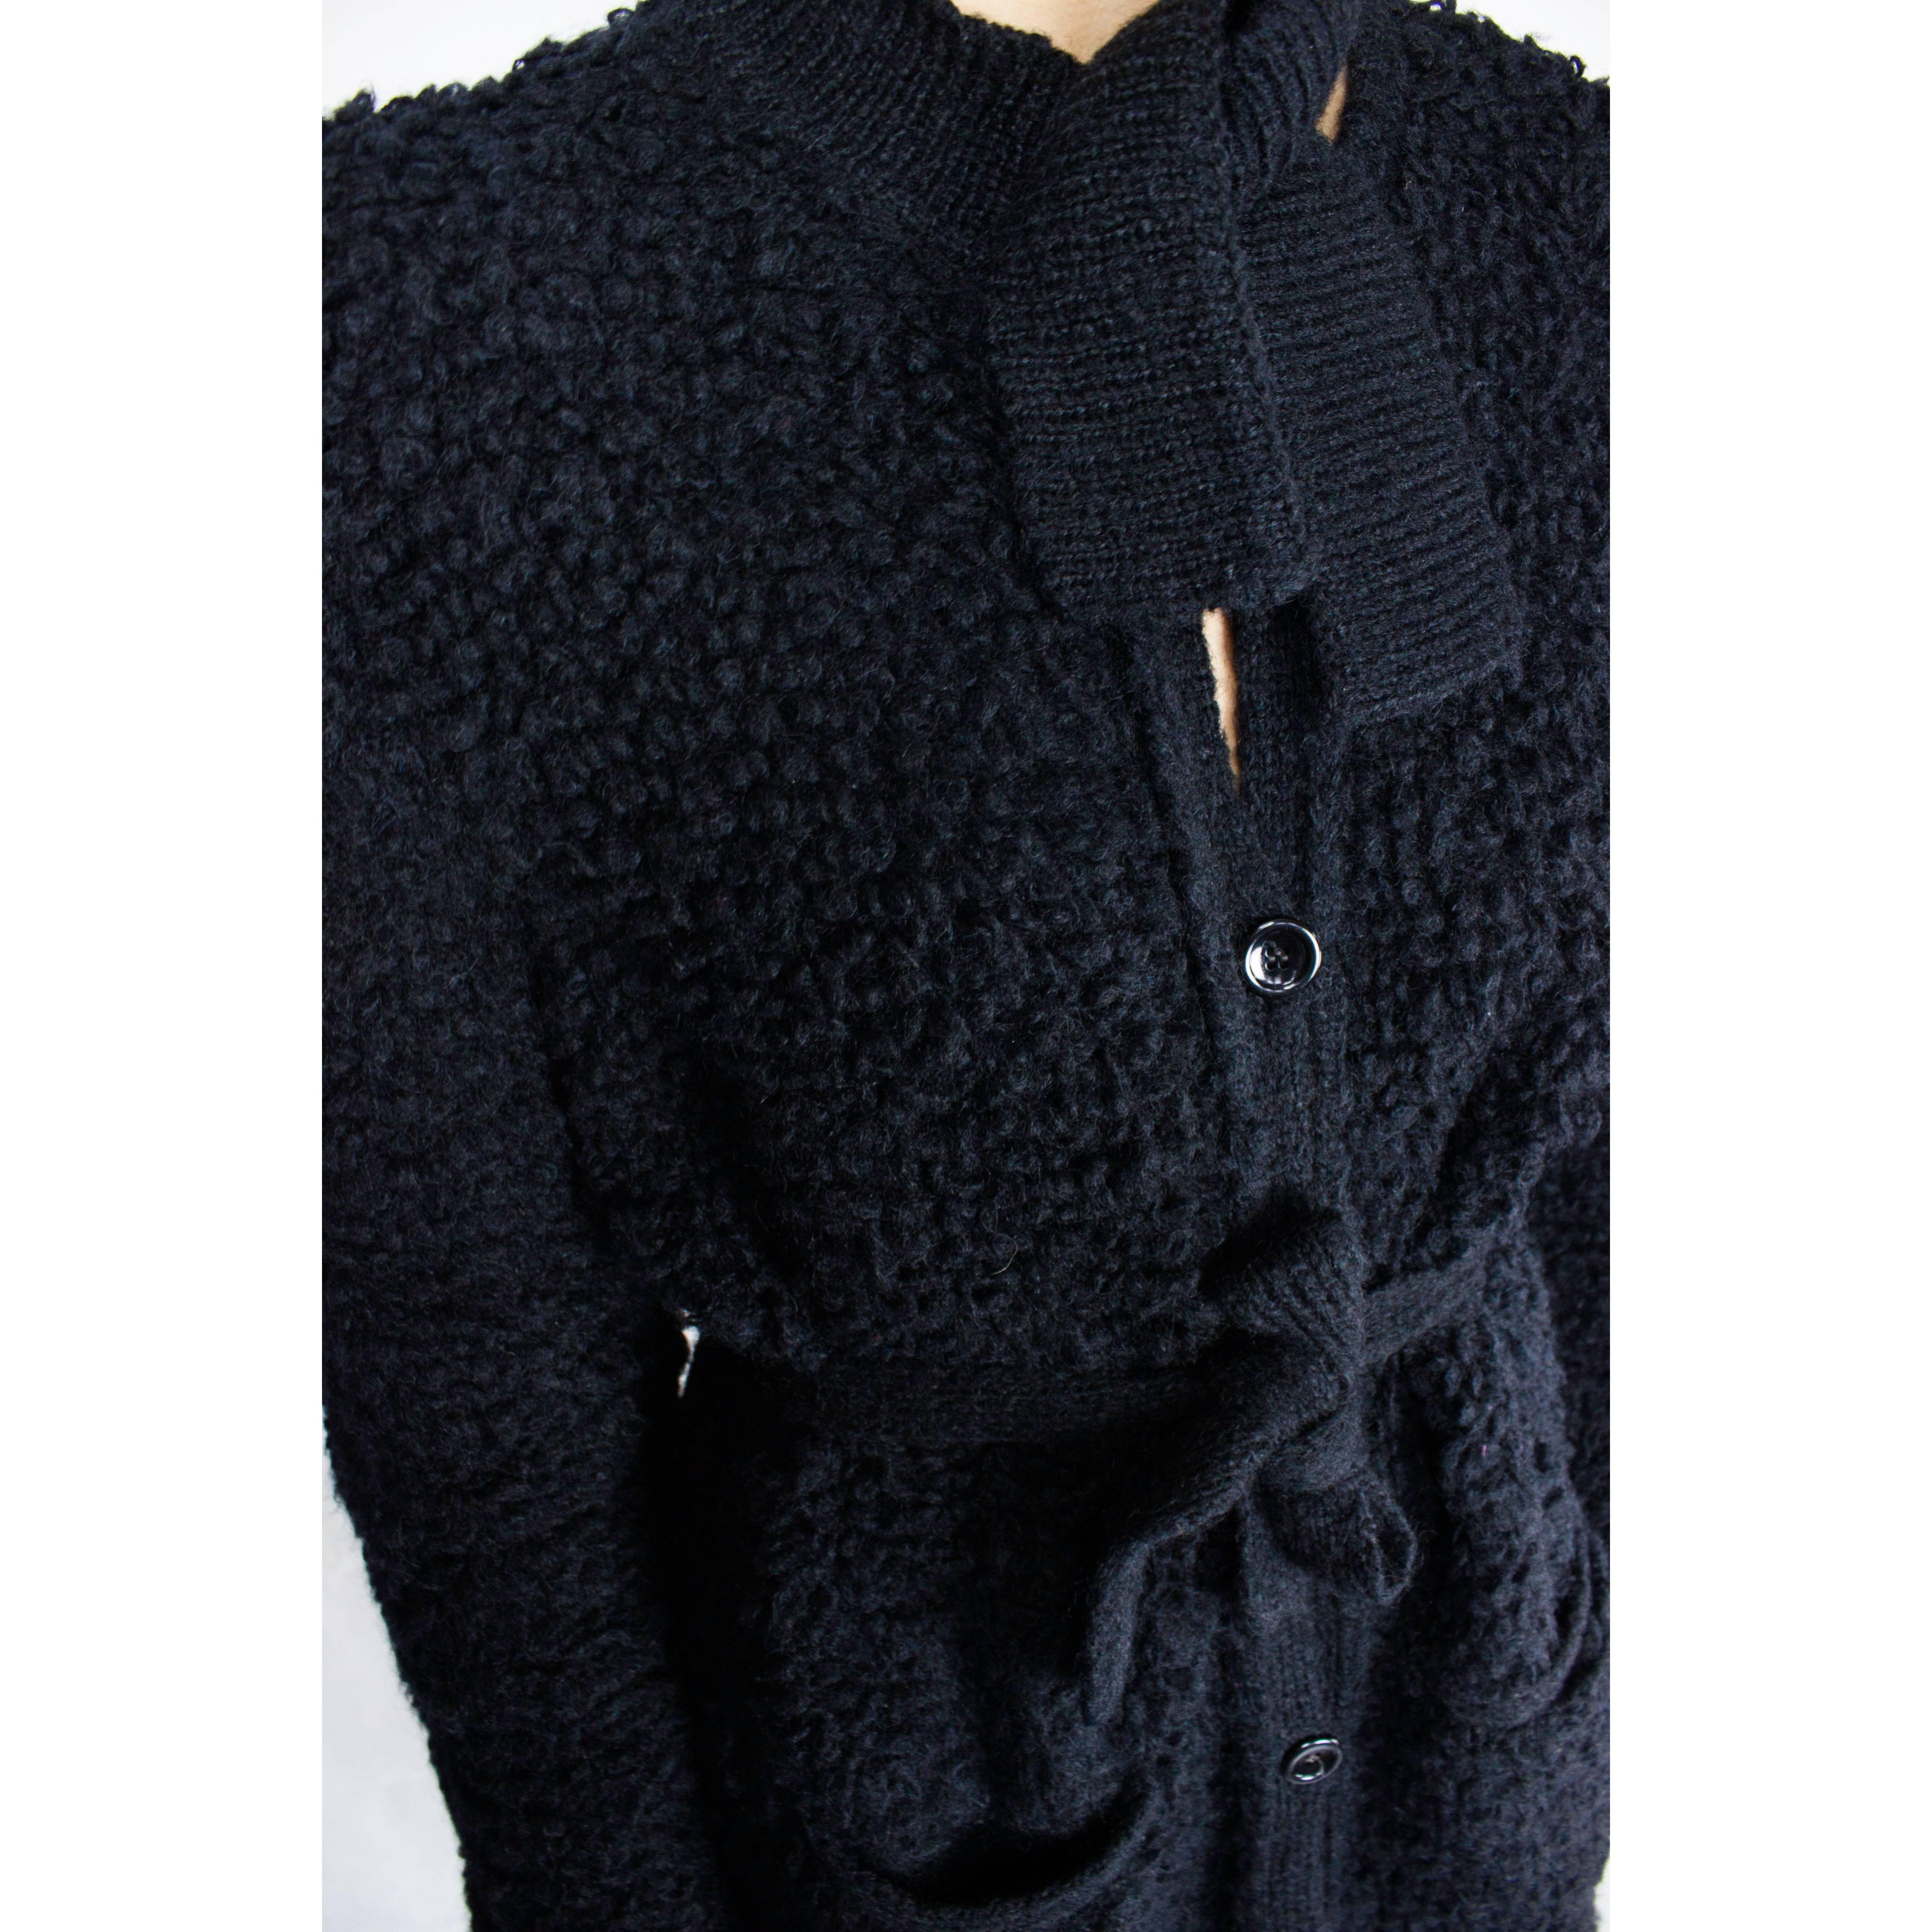 Sonia Rykiel Early knitted black wool coat, circa 1960s 2